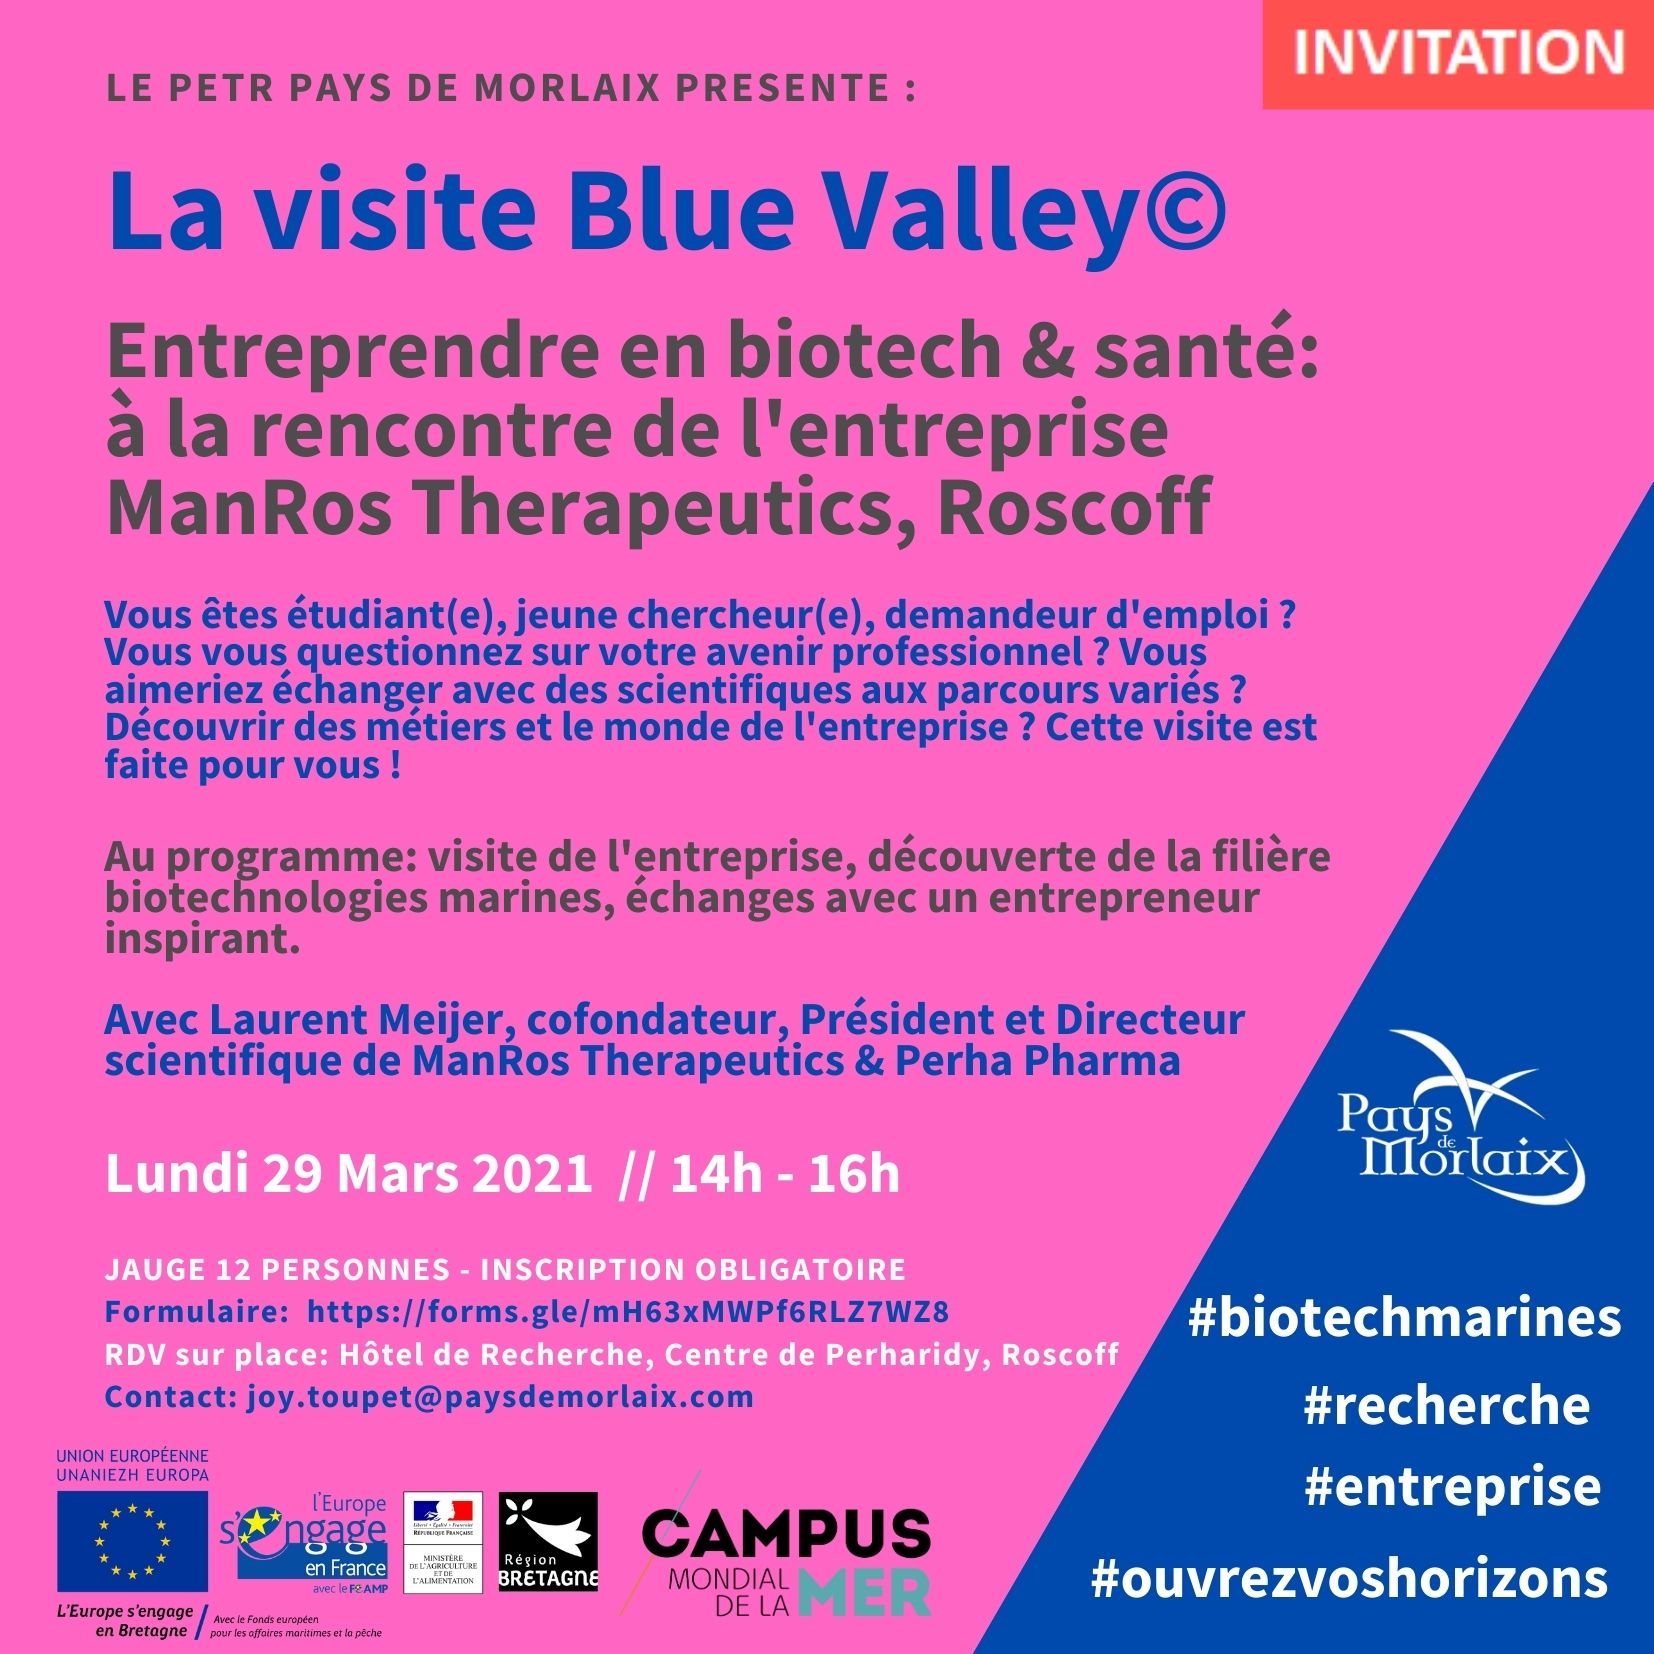 La visite Blue Valley : ManRos Therapeutics